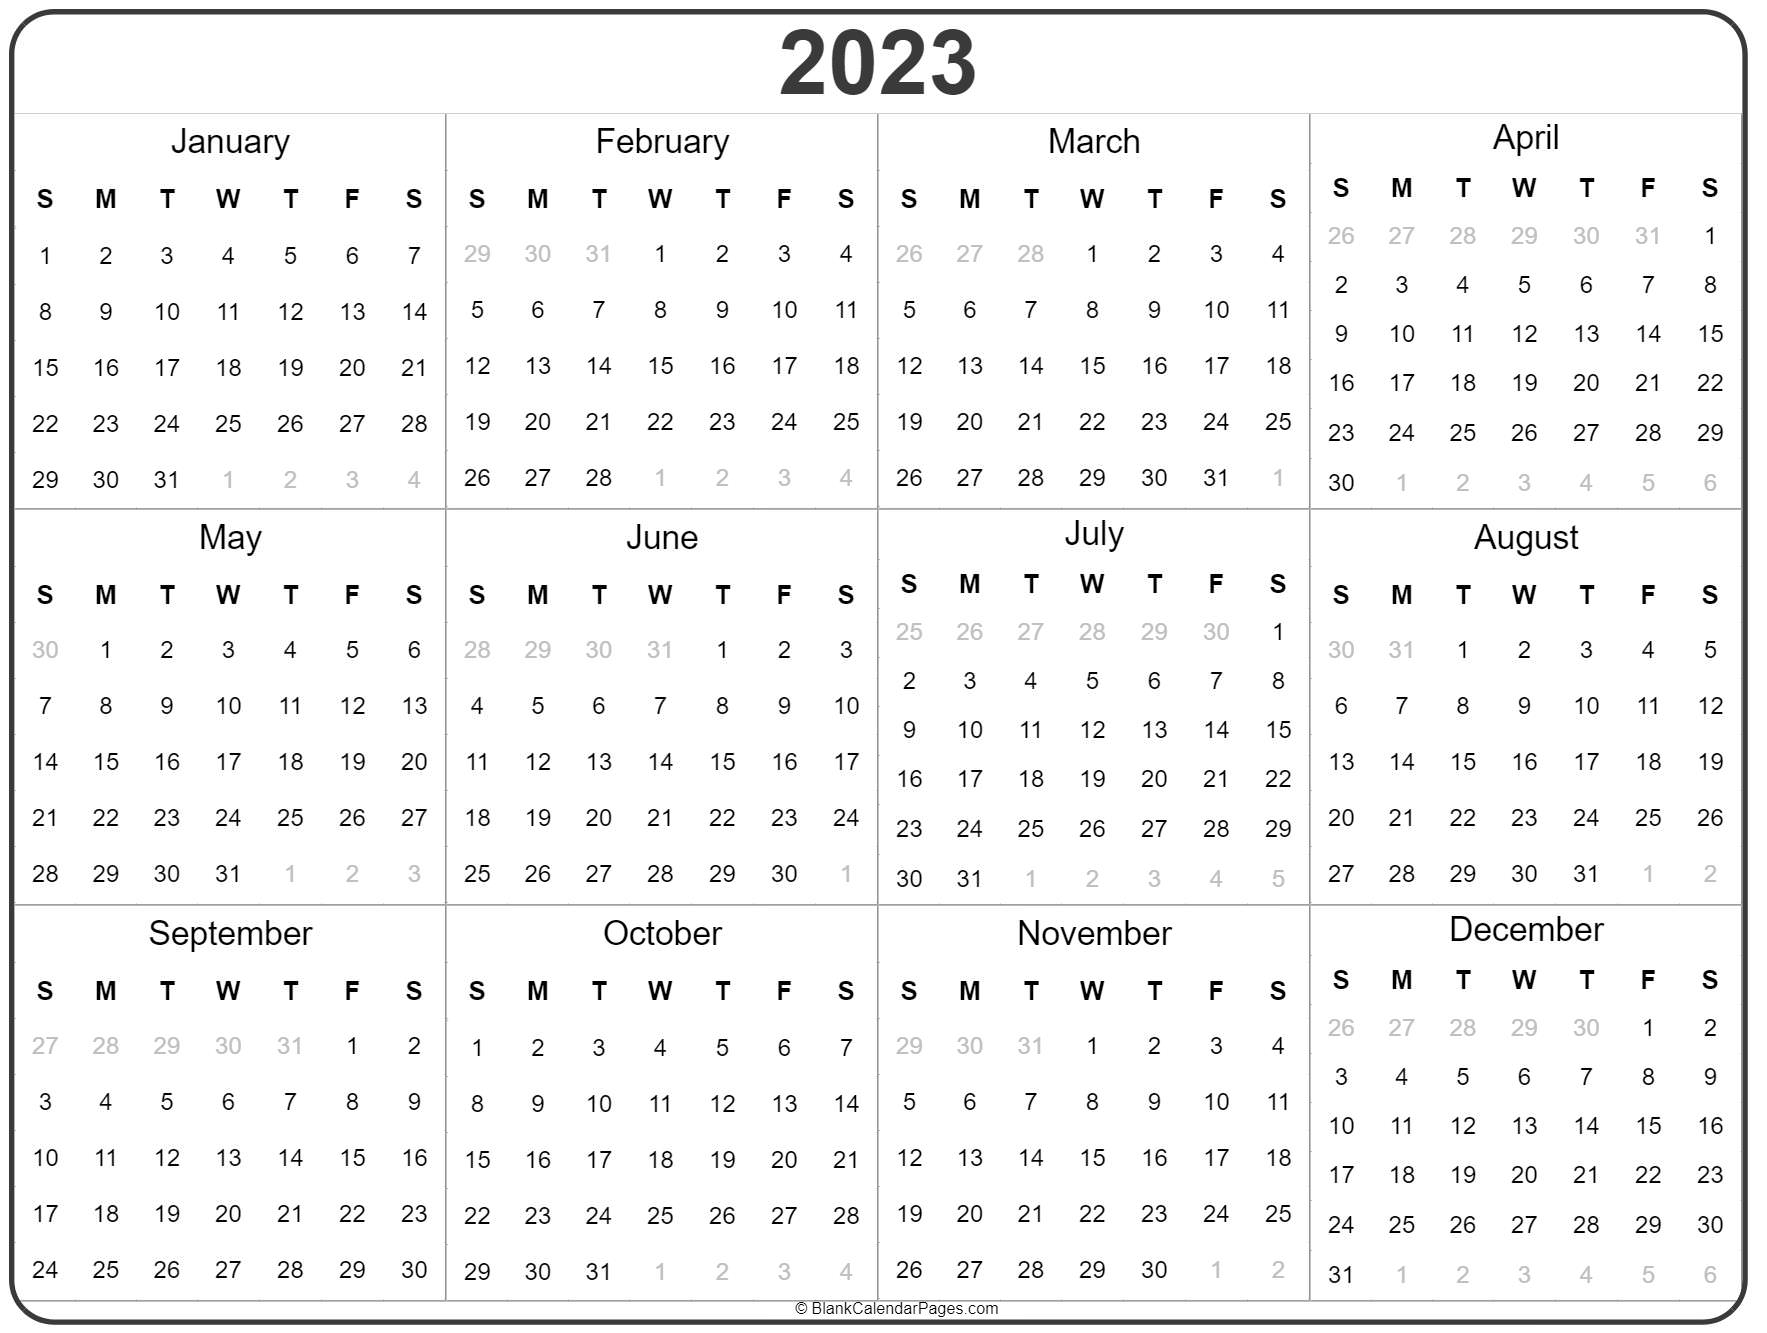 2023 Calendar Pdf Word Excel 2023 Calendar Templates And Images Printable Calendar 2023 Year